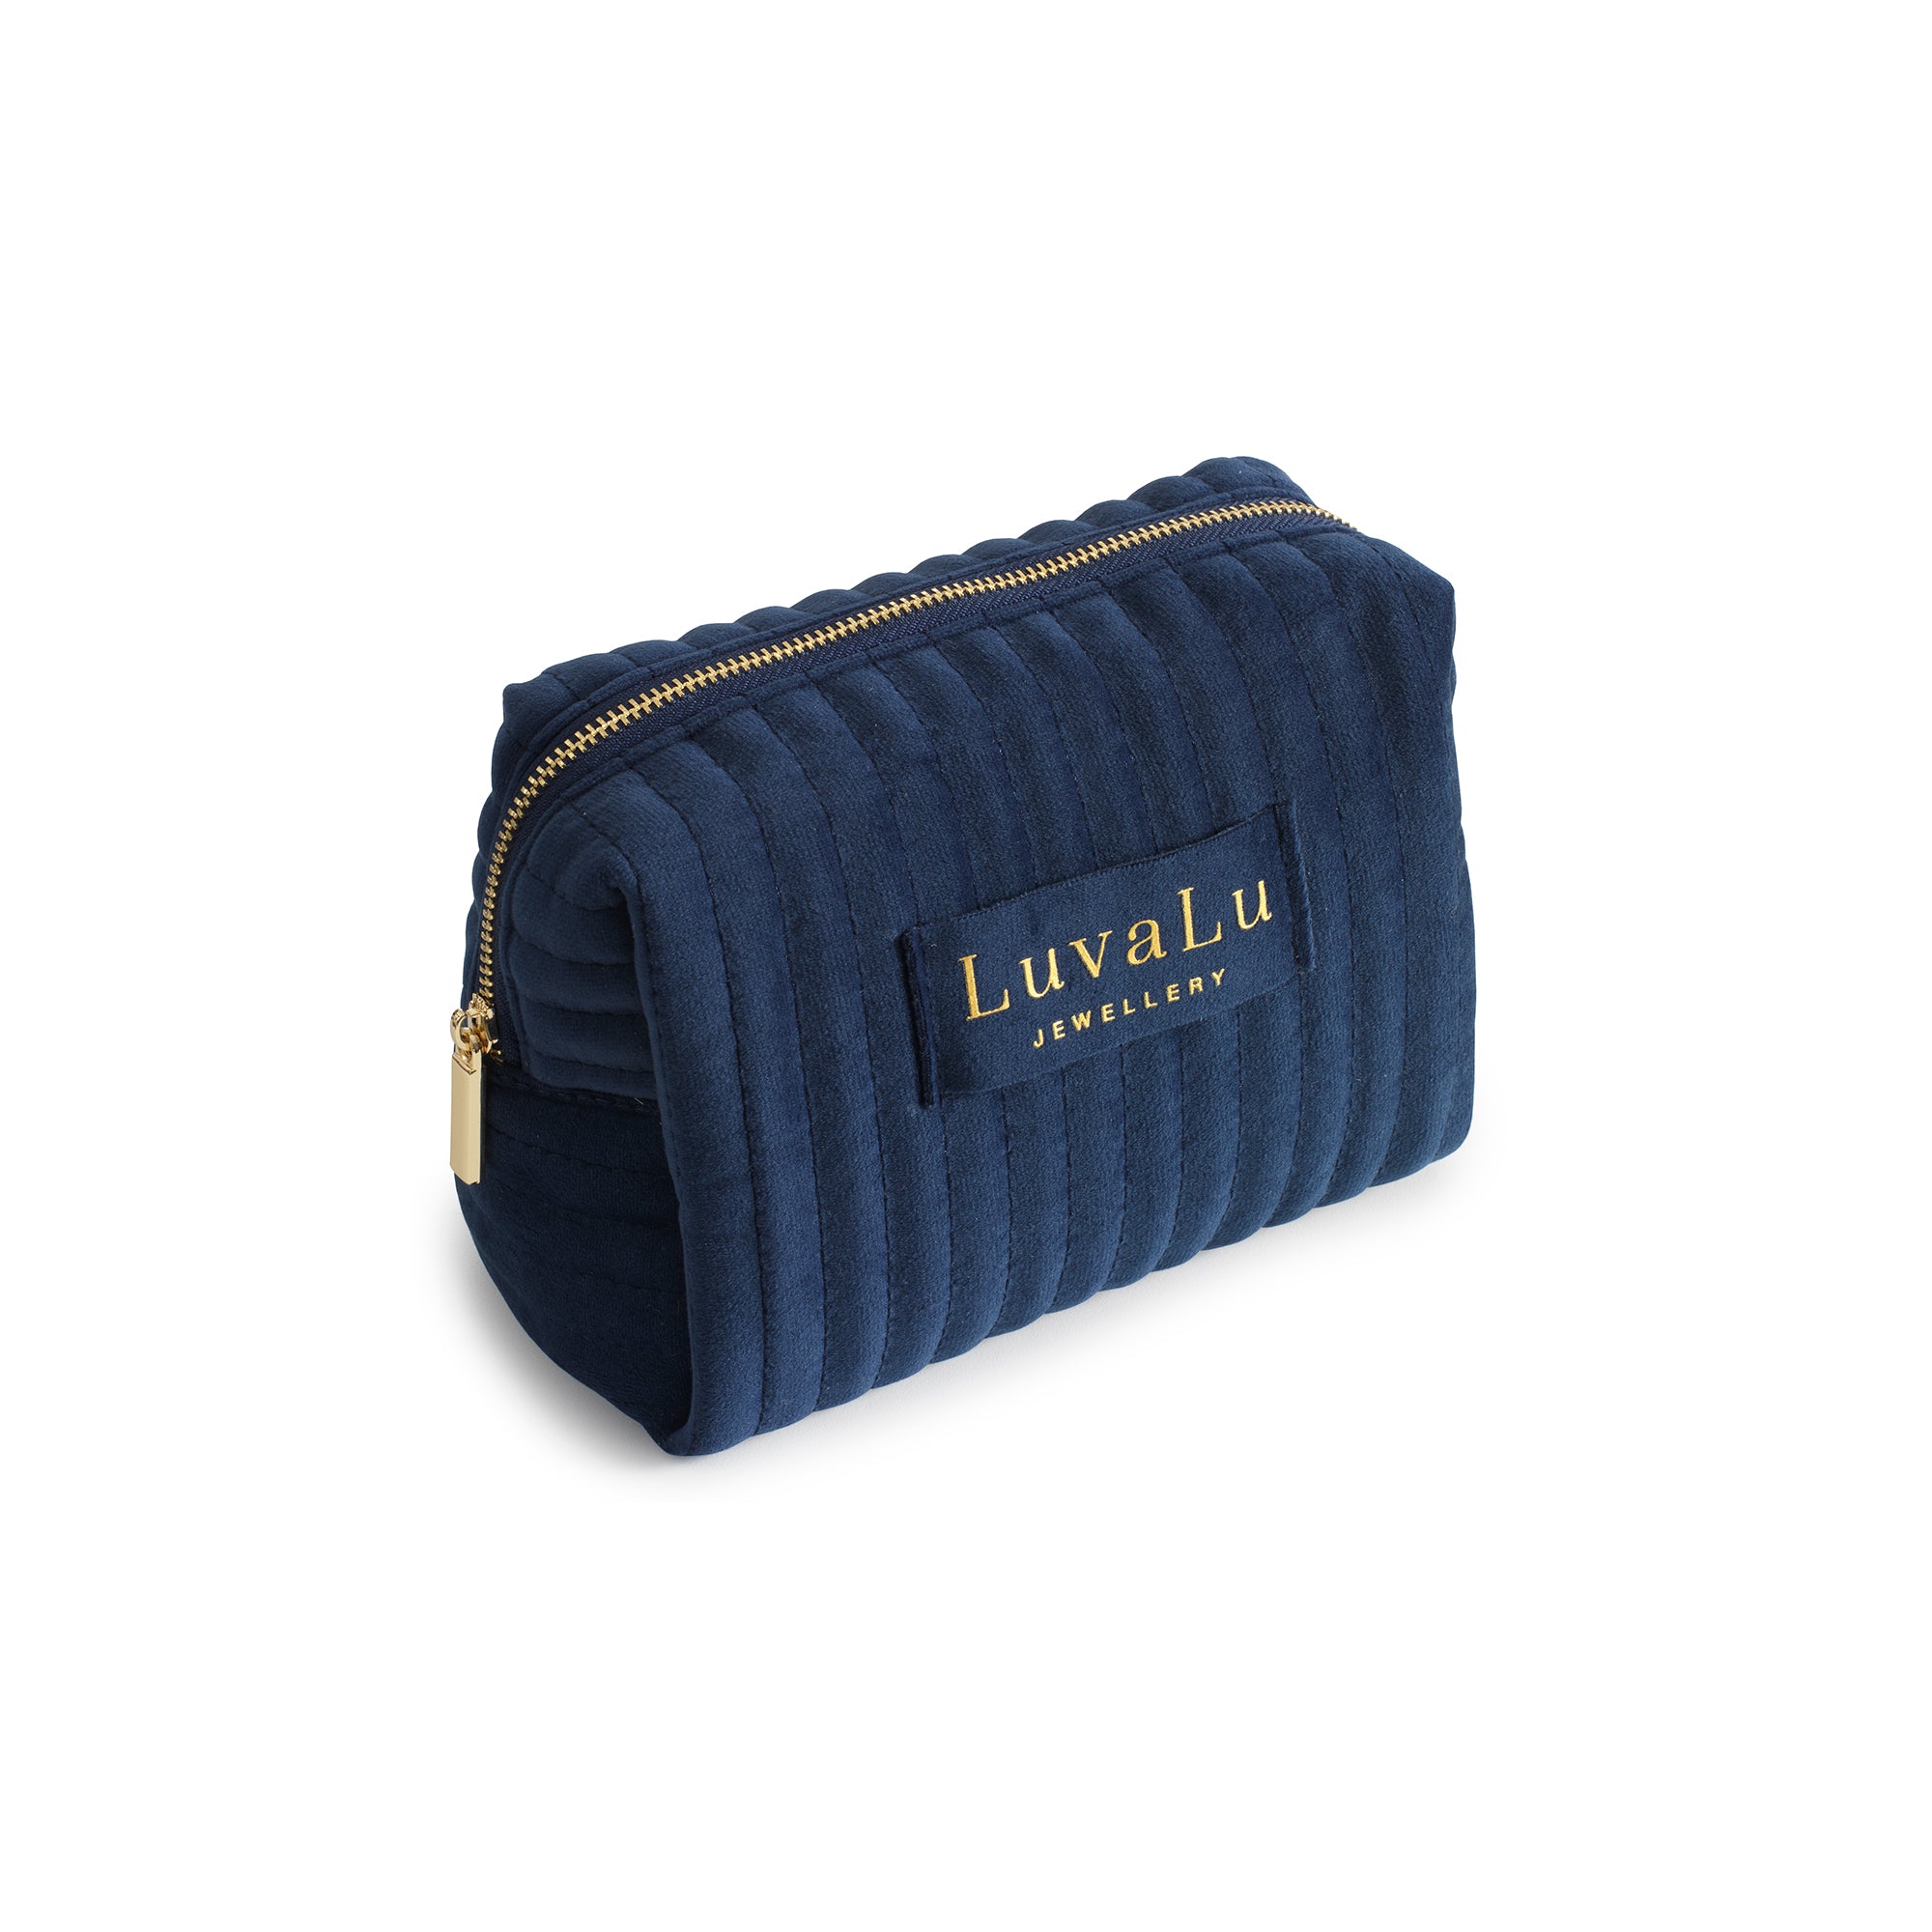 LuvaLu Jewellery - Small Navy blue Makeup bag